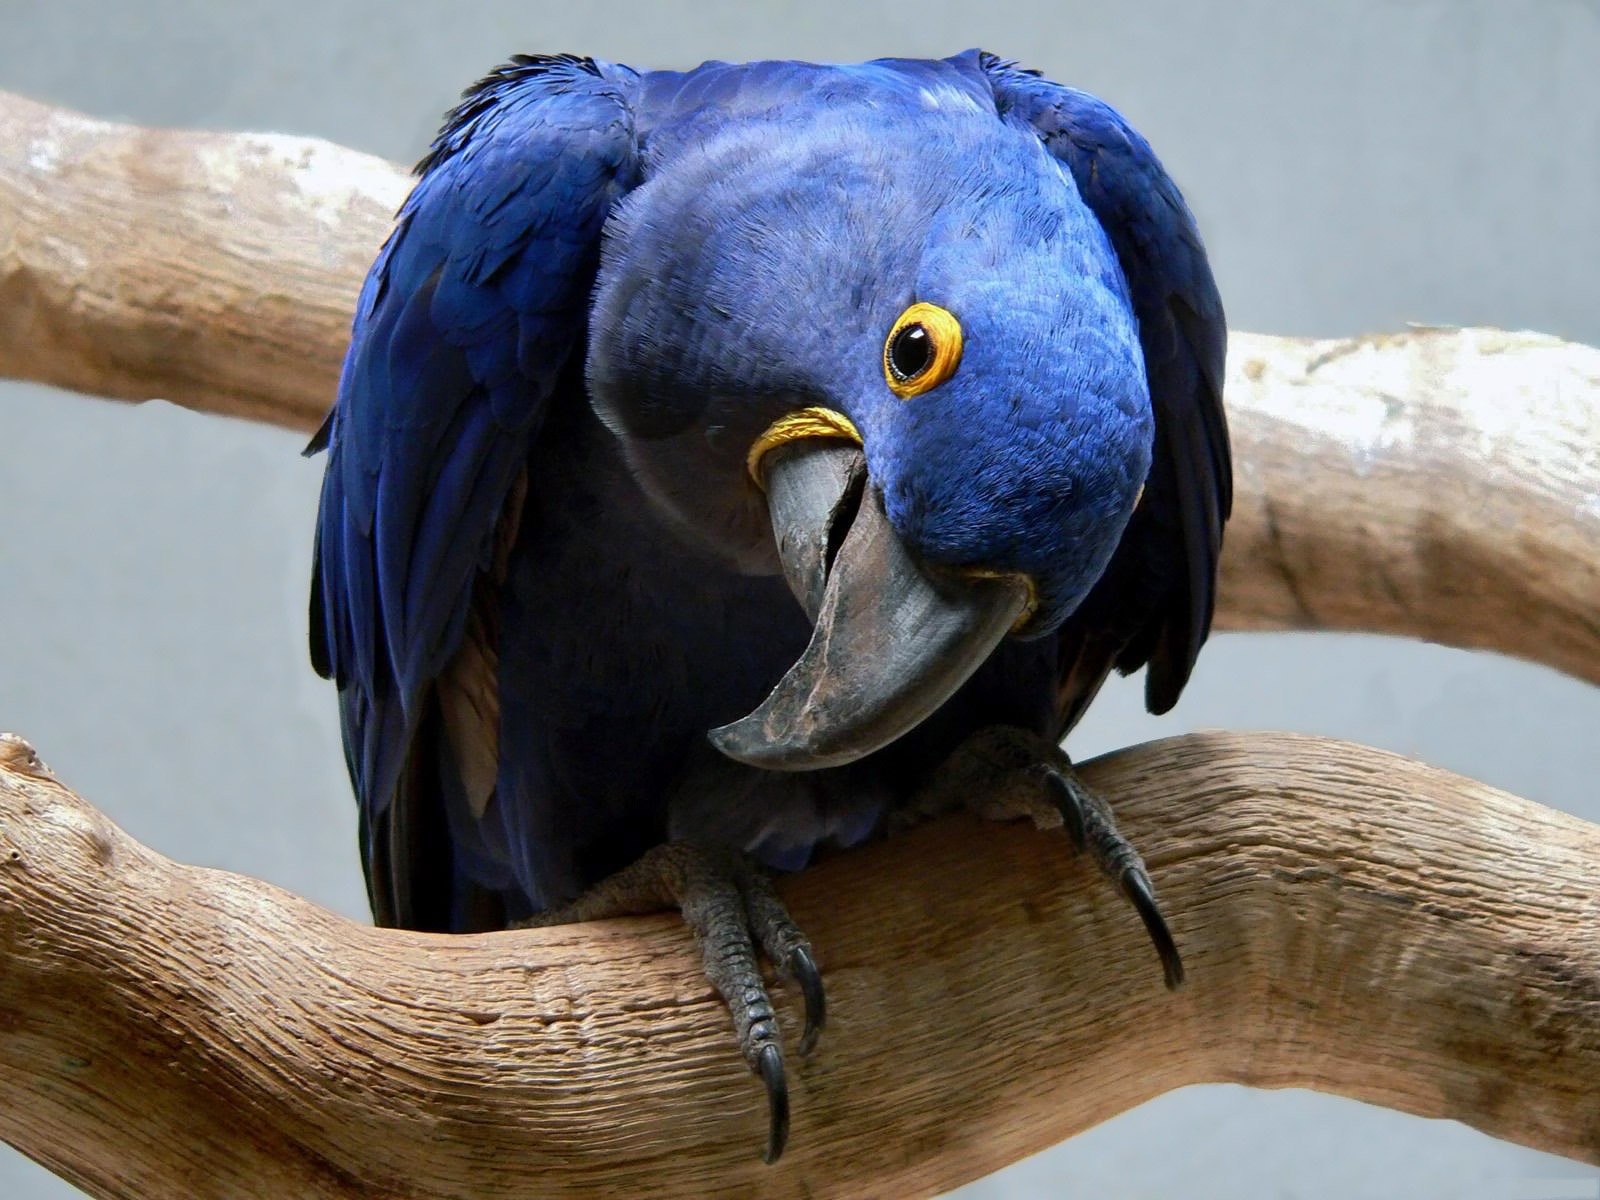 Popular Hyacinth Macaw Image for Phone